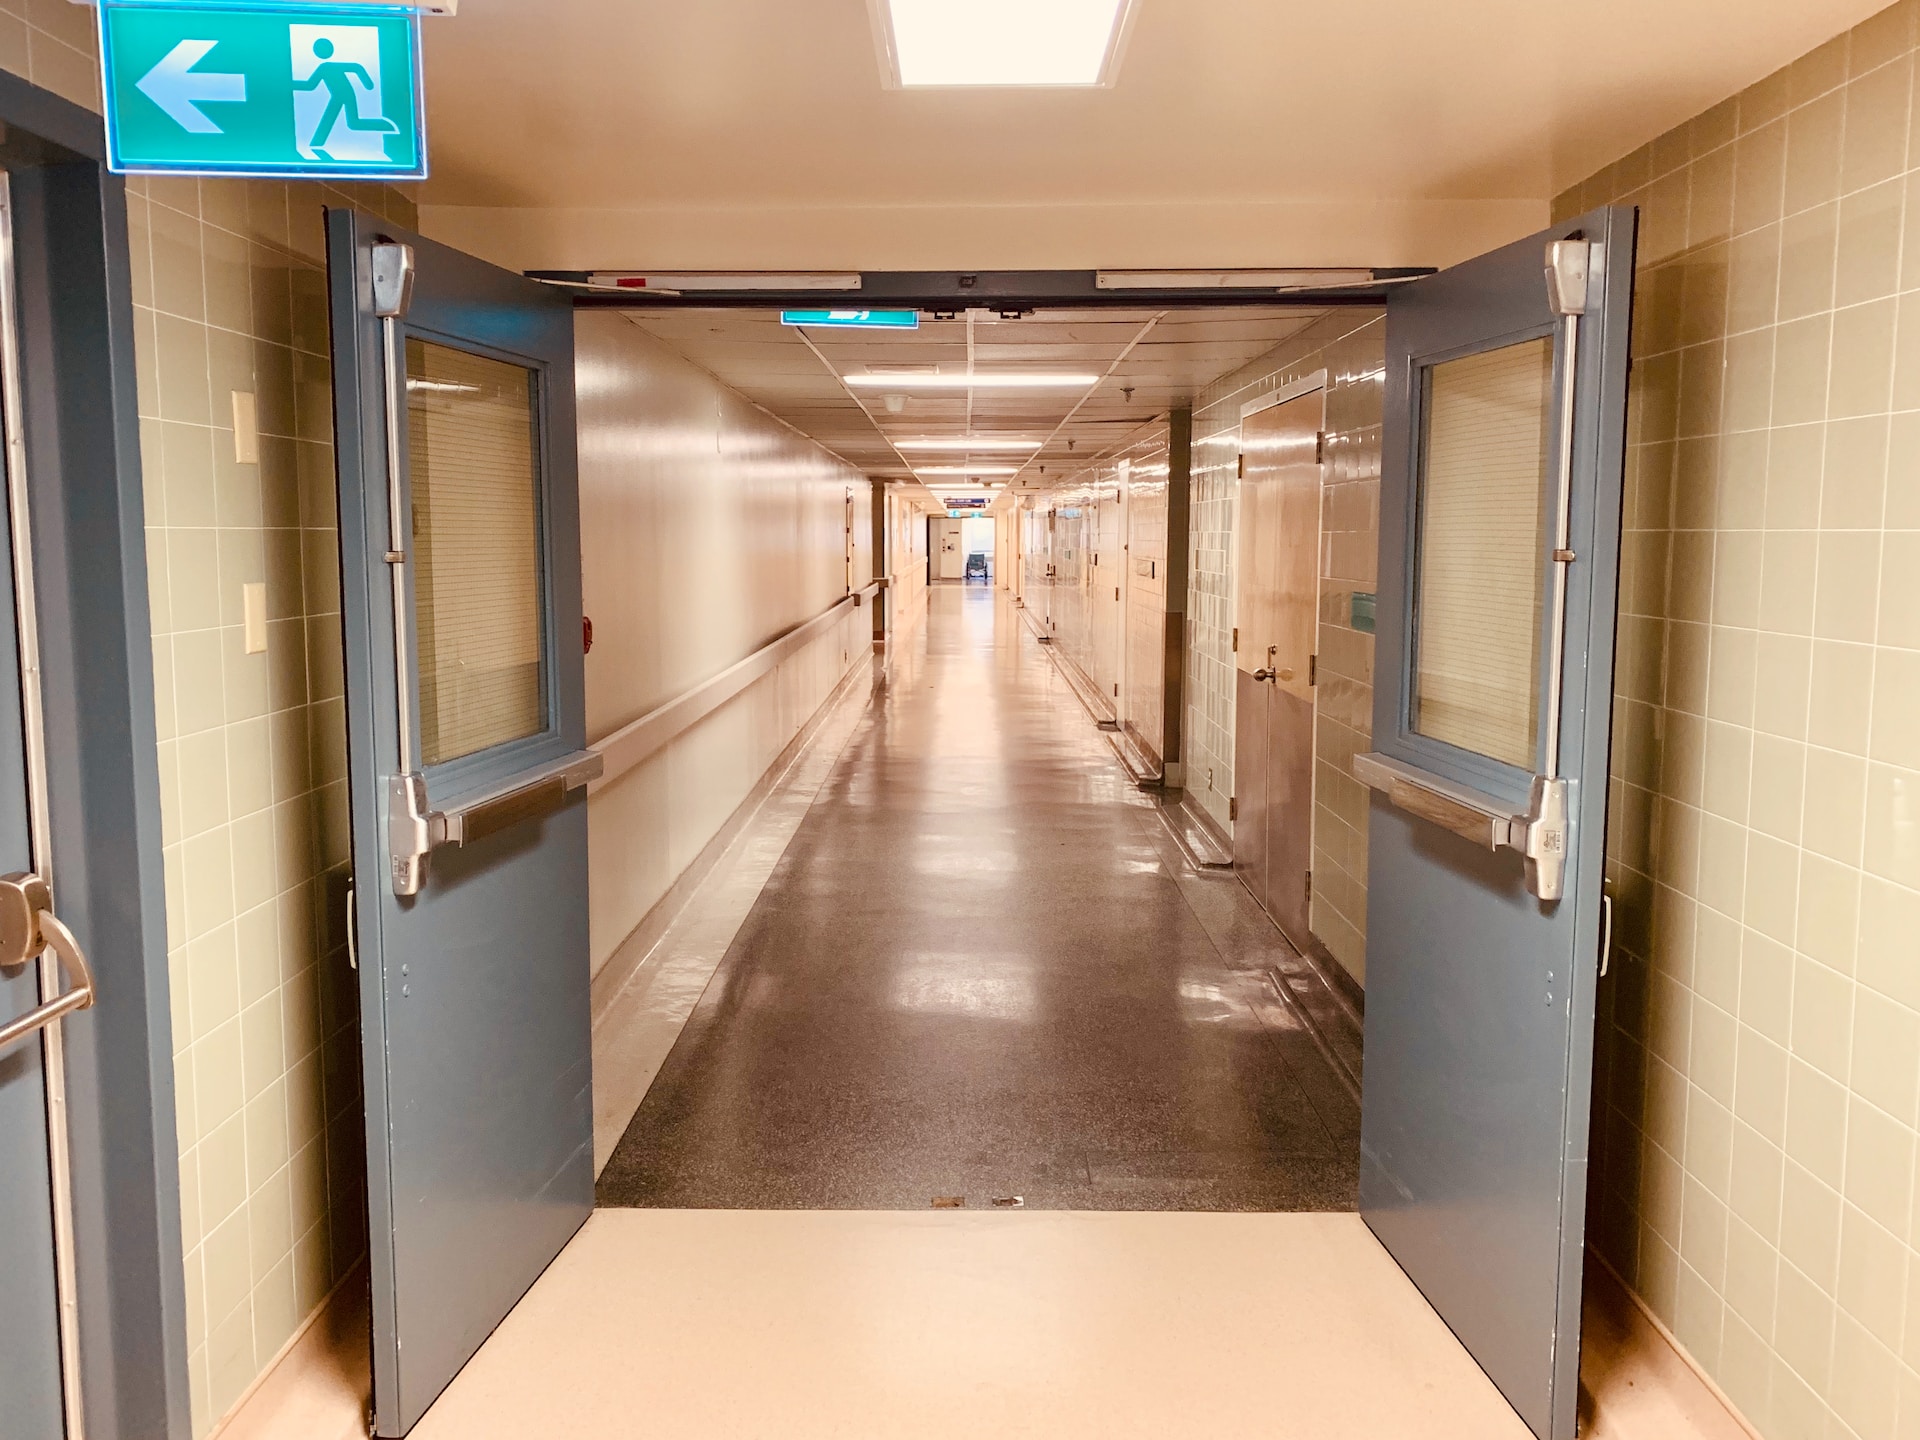 A hospital hallway